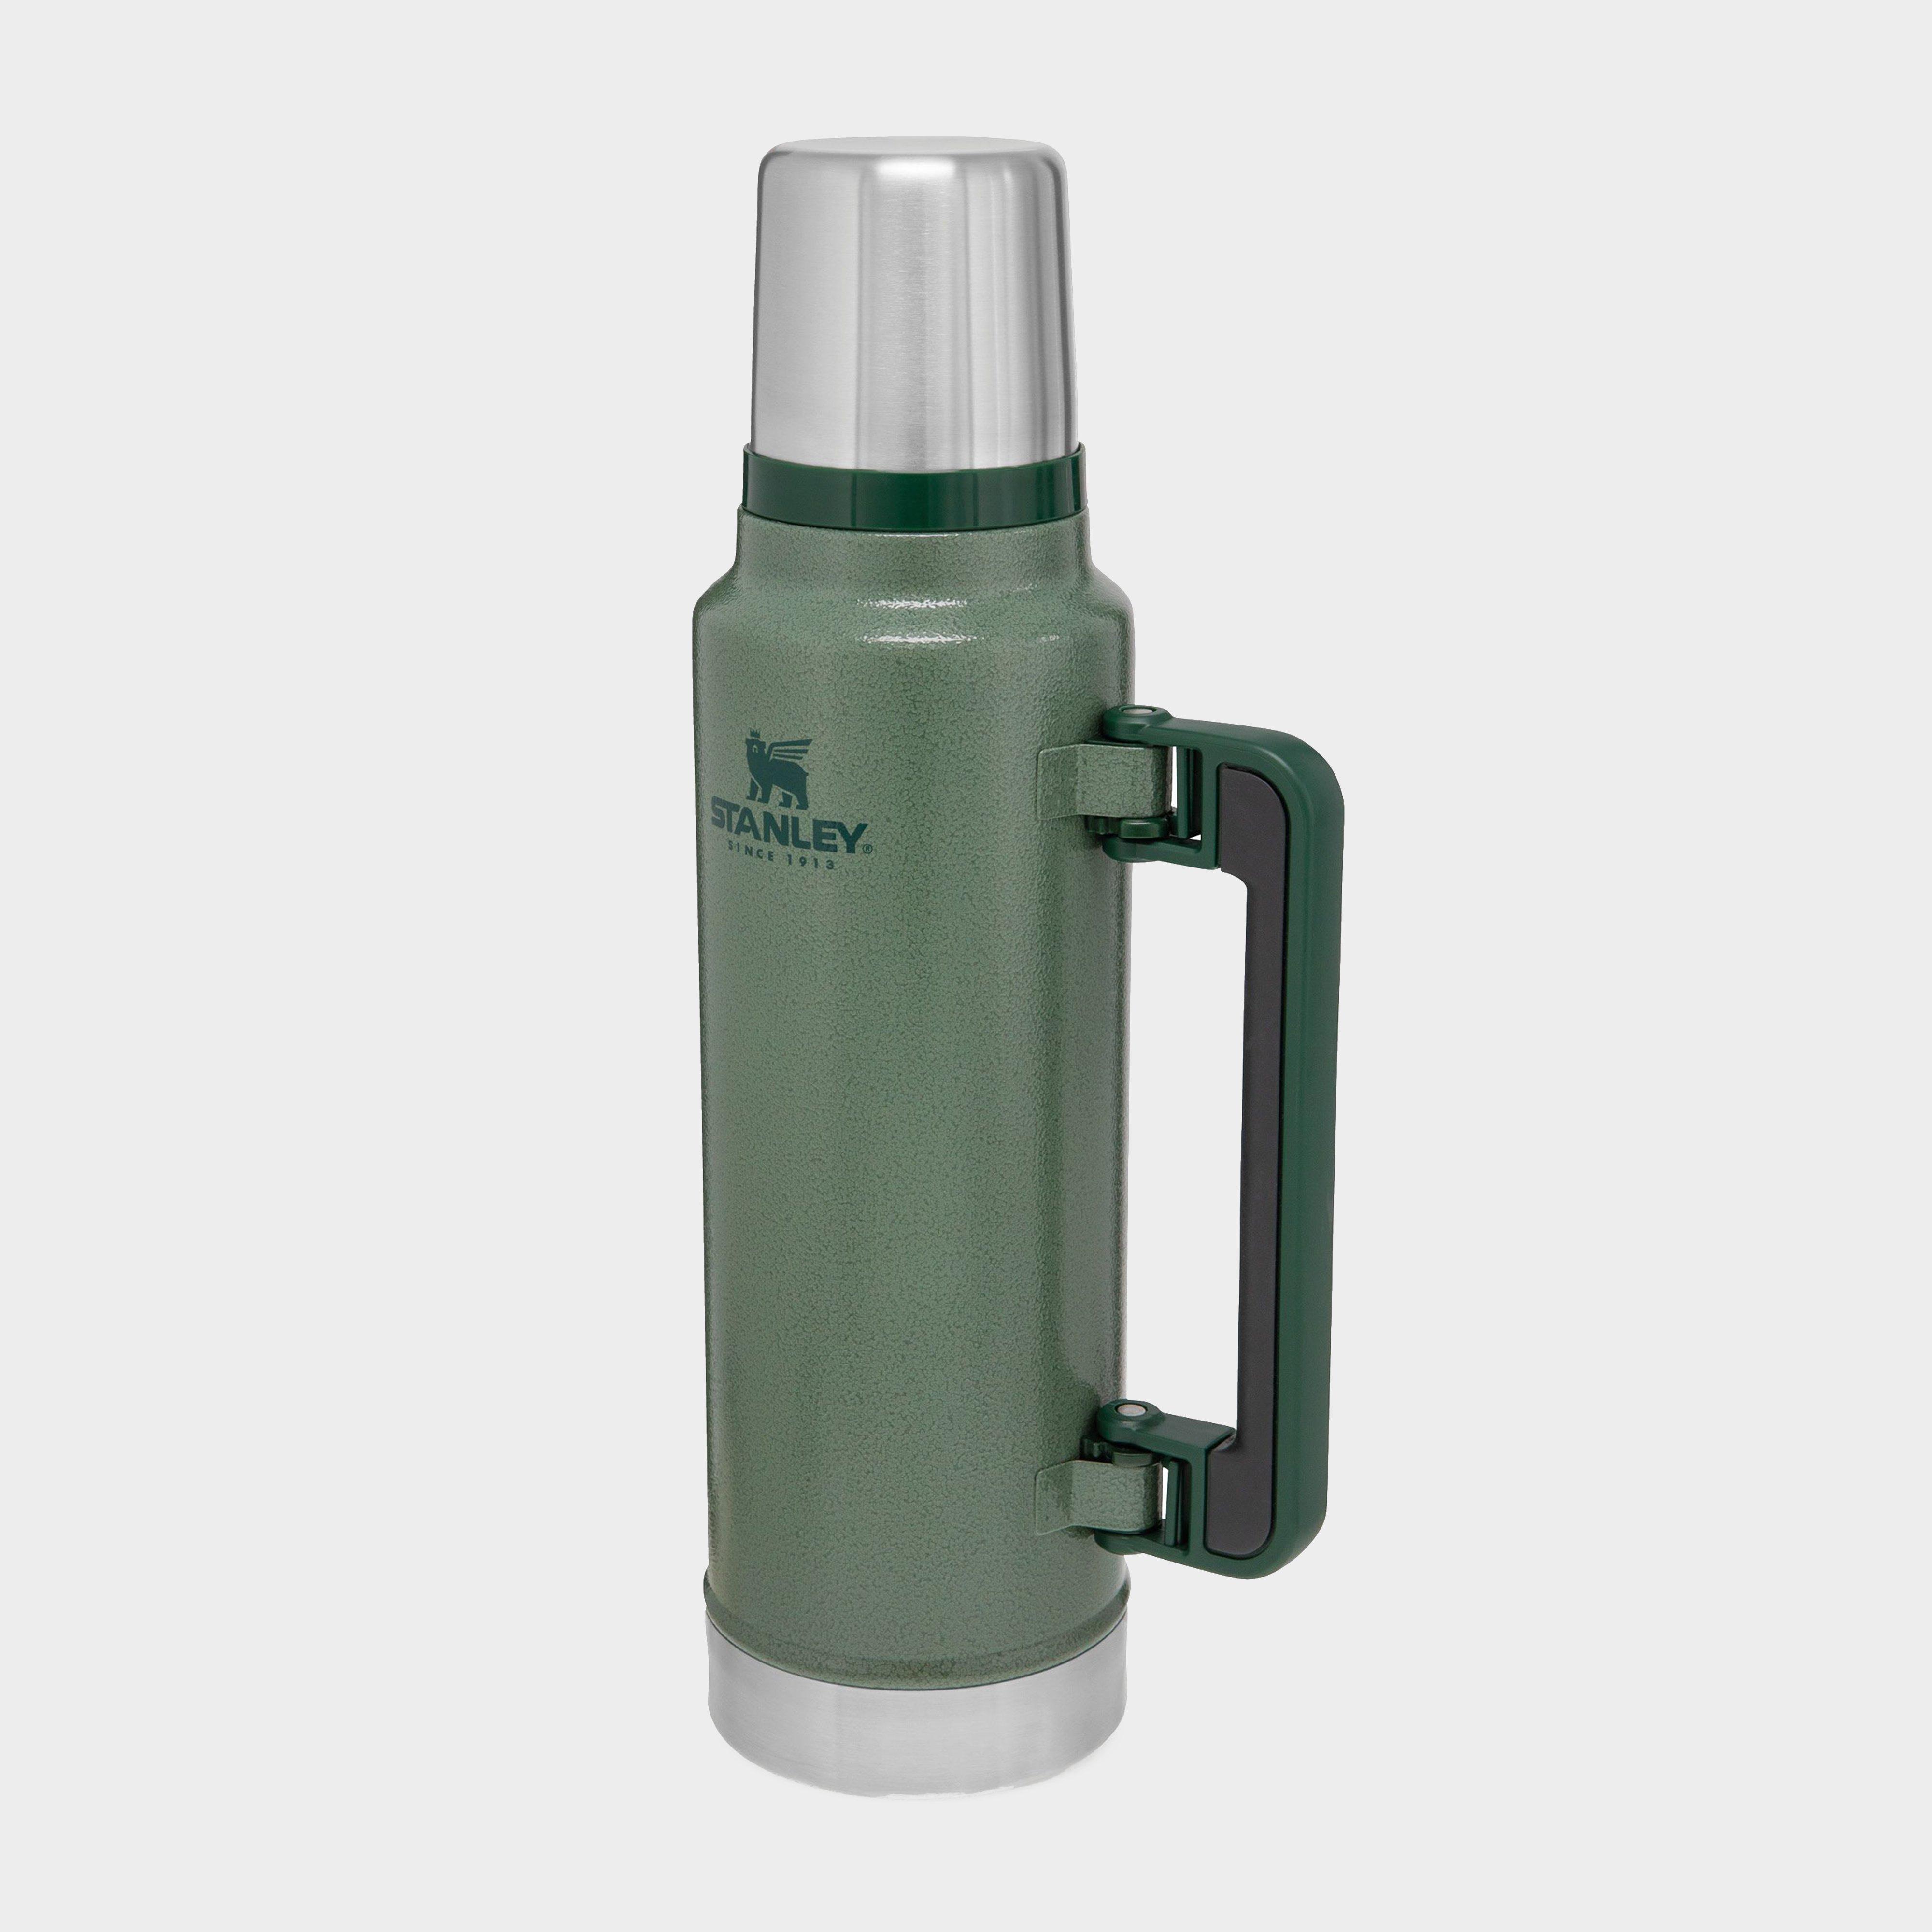 Stanley Stanley Classic 1.4L Vacuum Bottle - Green, Green